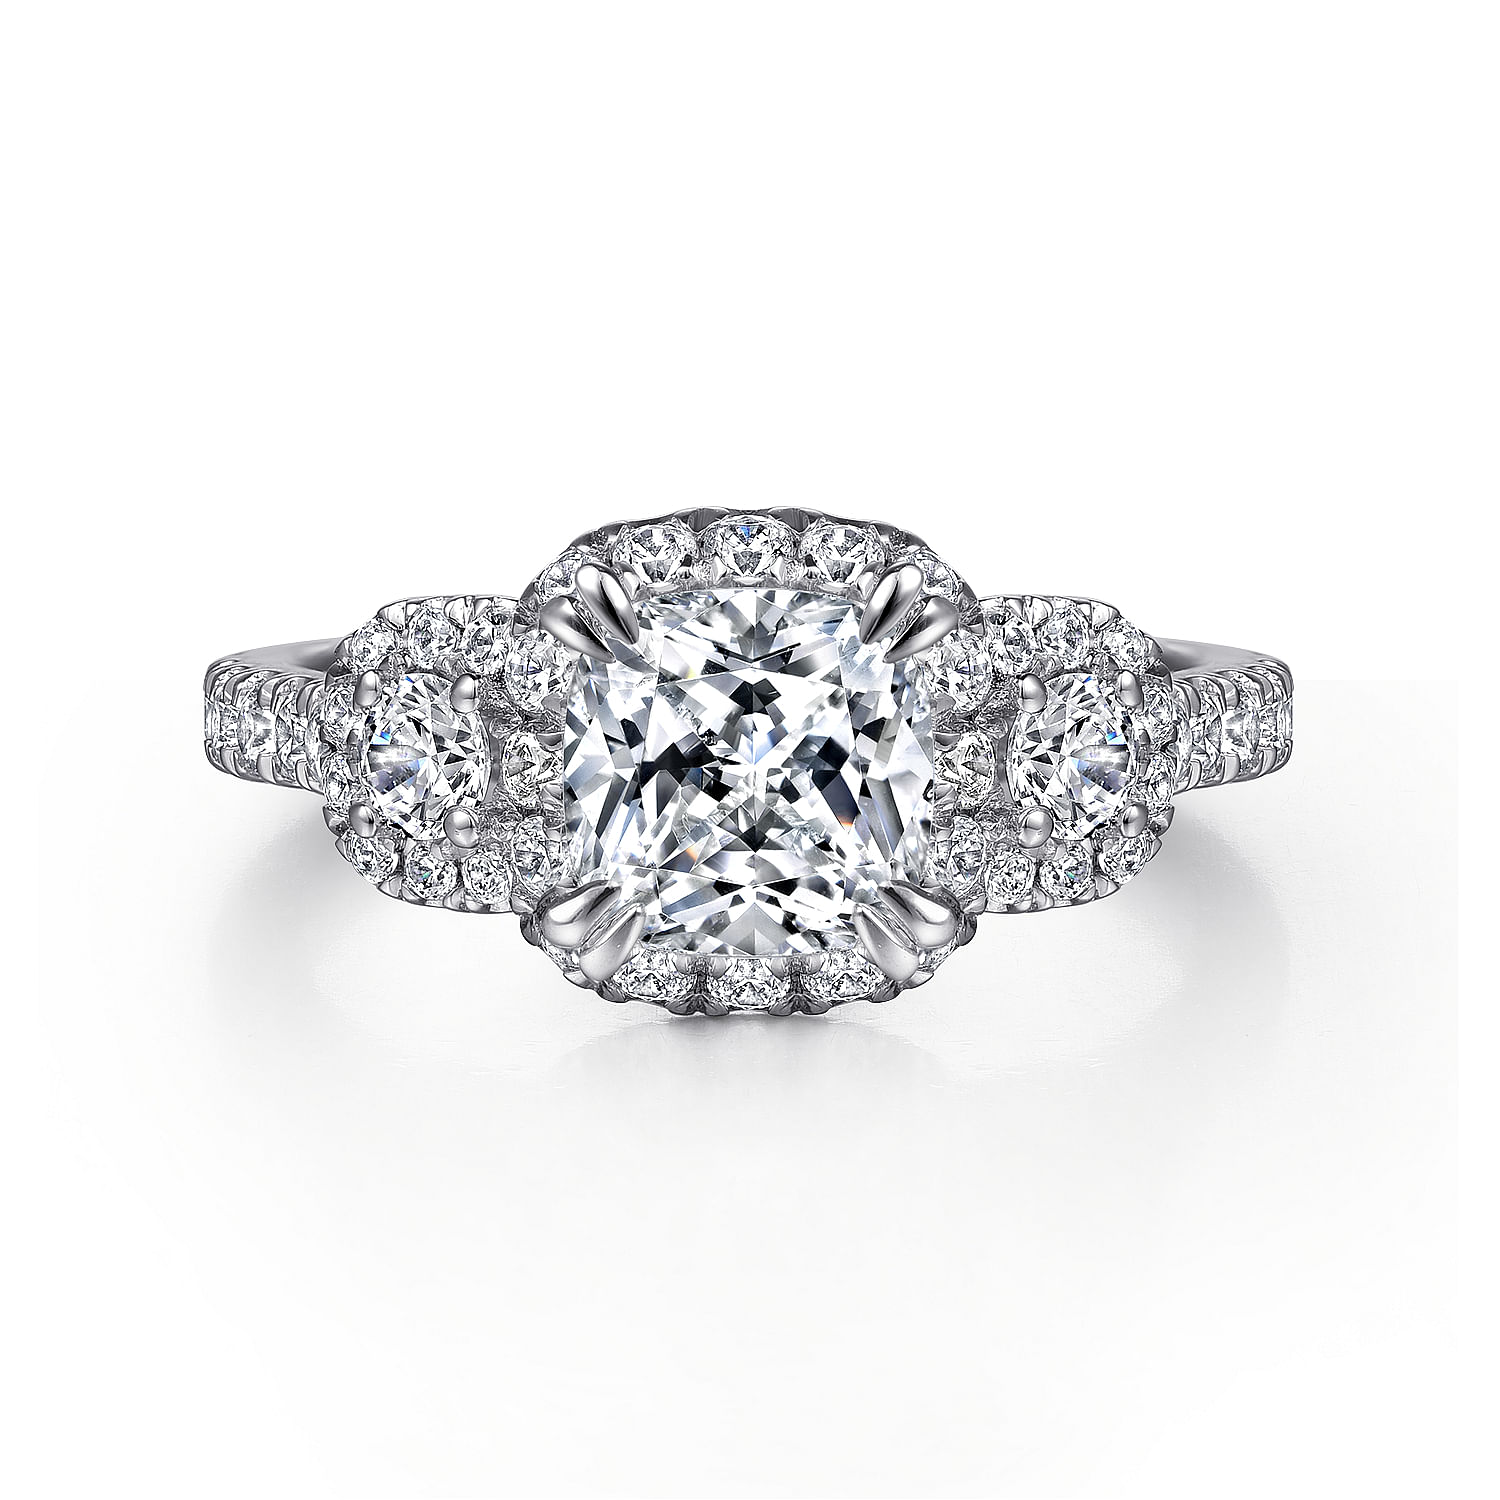 Lavender - 14K White Gold Cushion Cut Diamond Engagement Ring